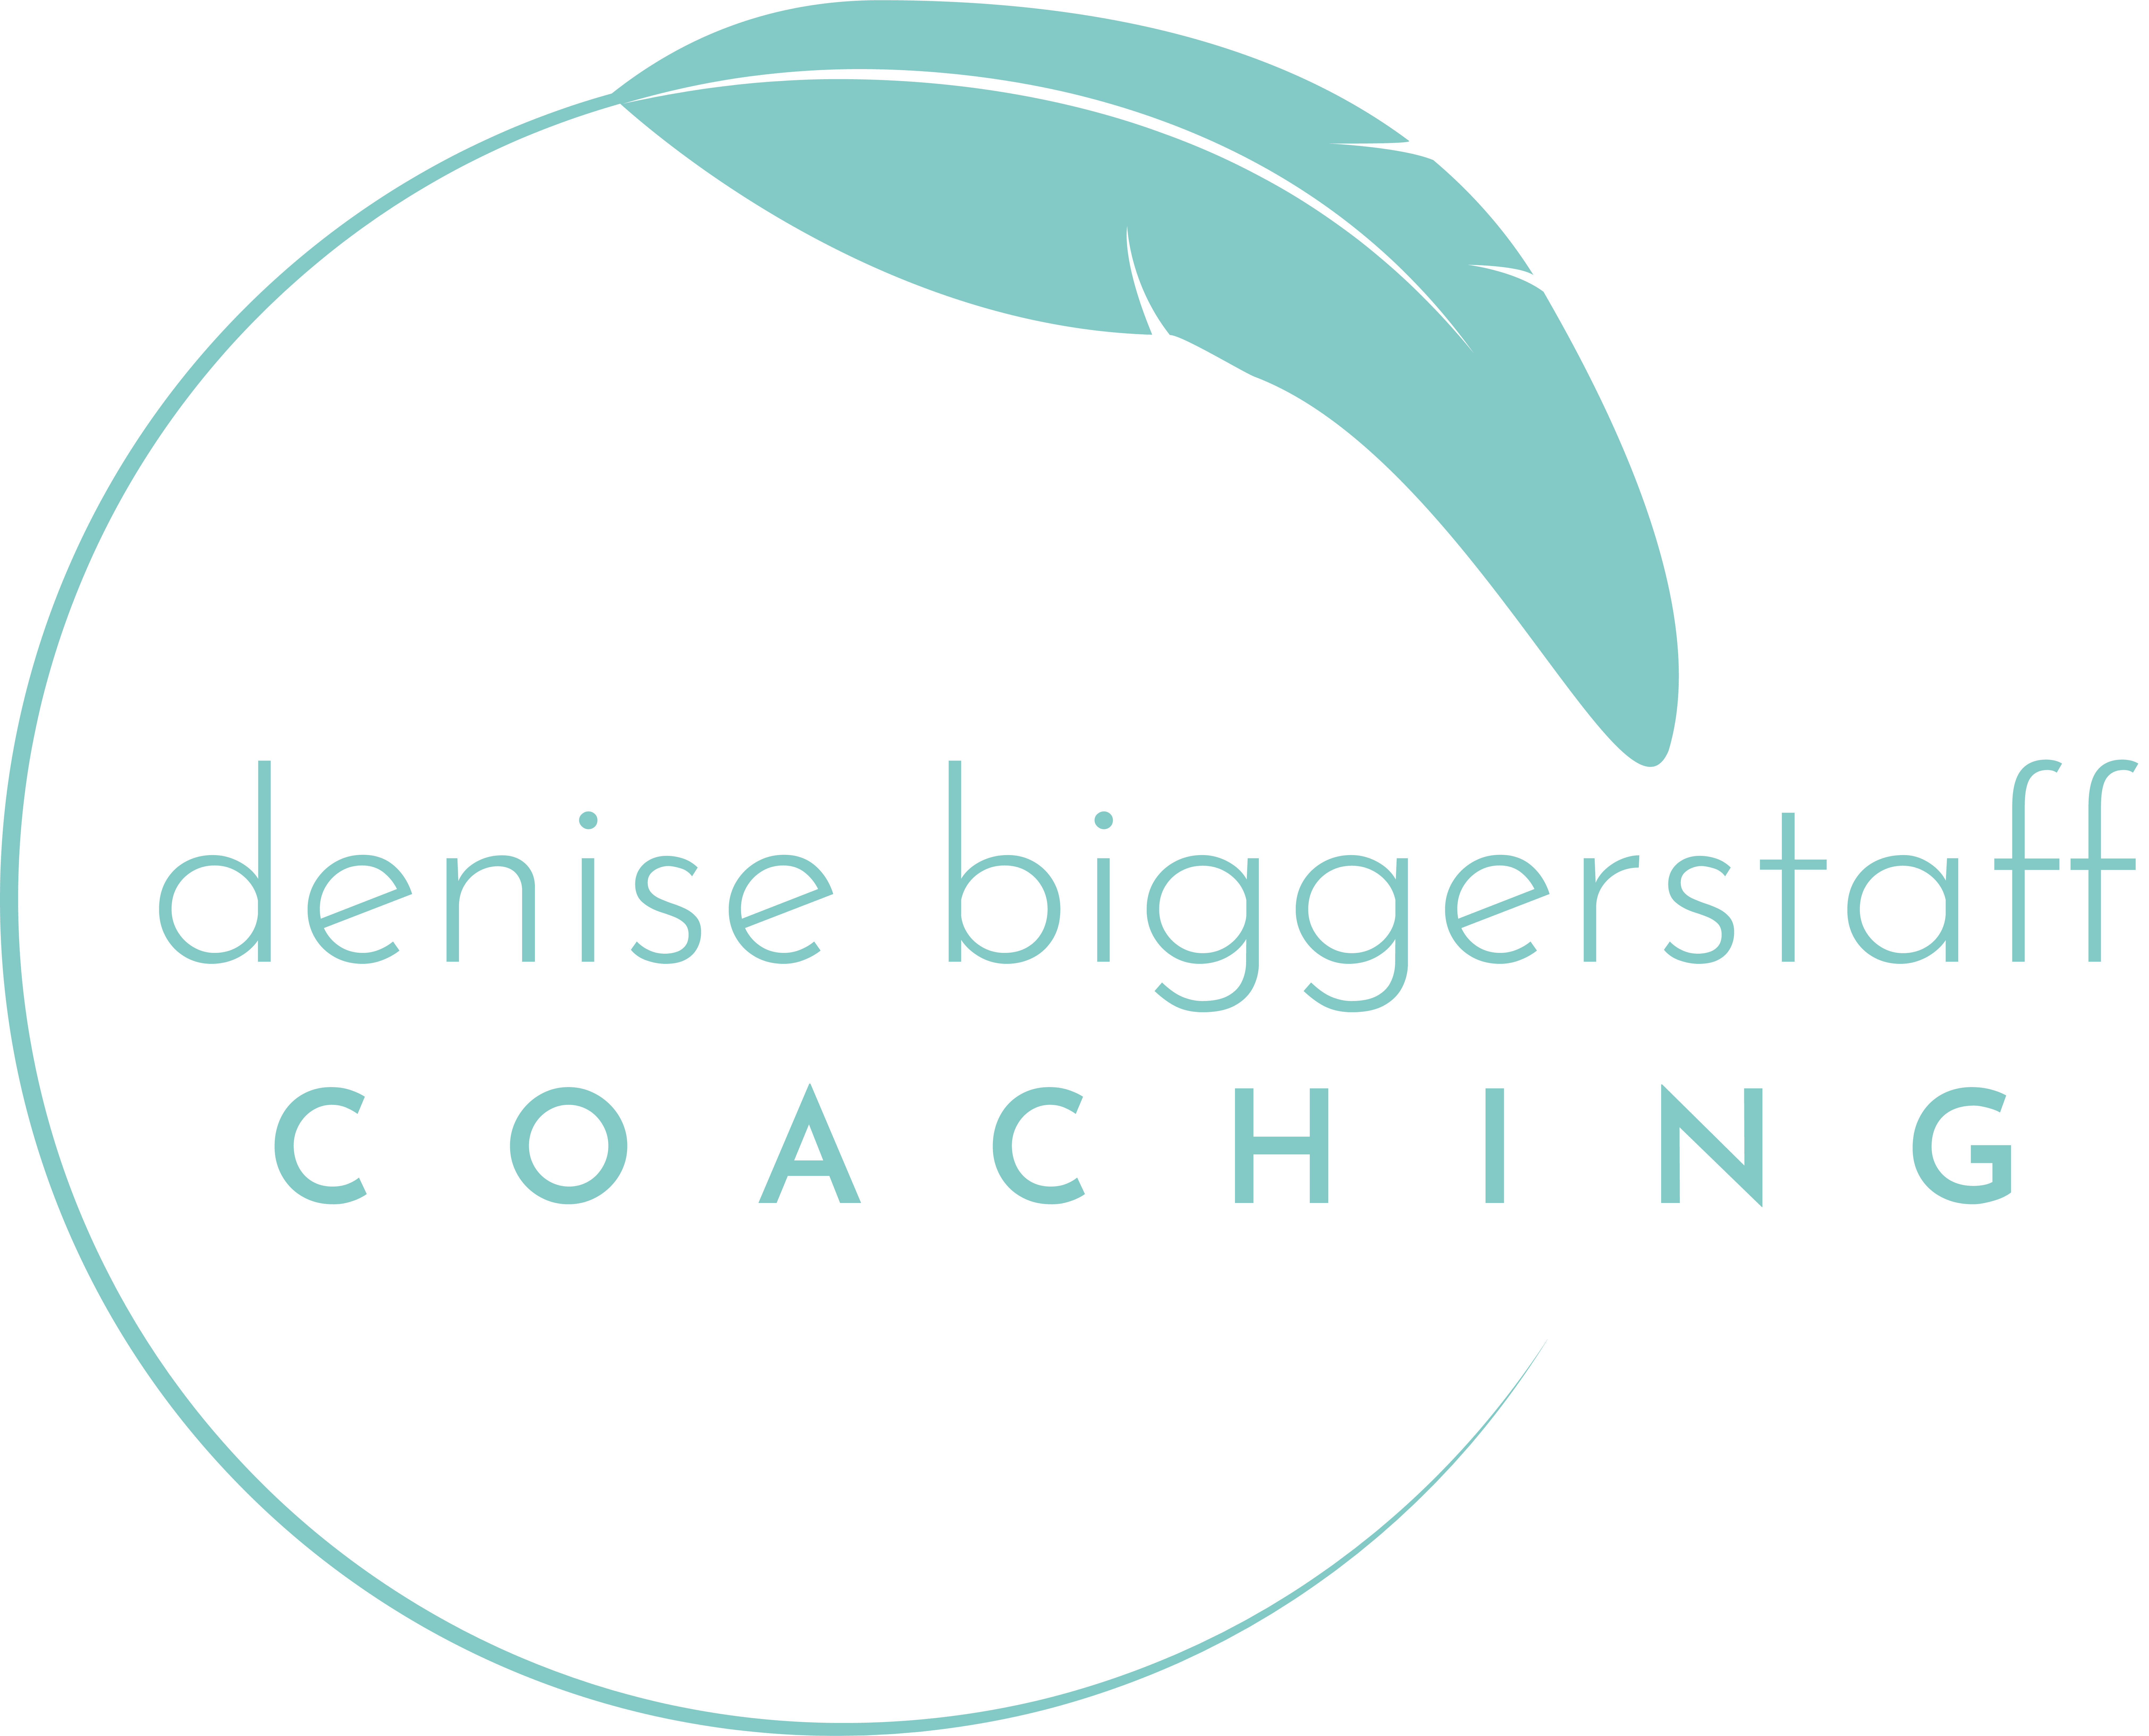 Denise Biggerstaff Coaching logo in green